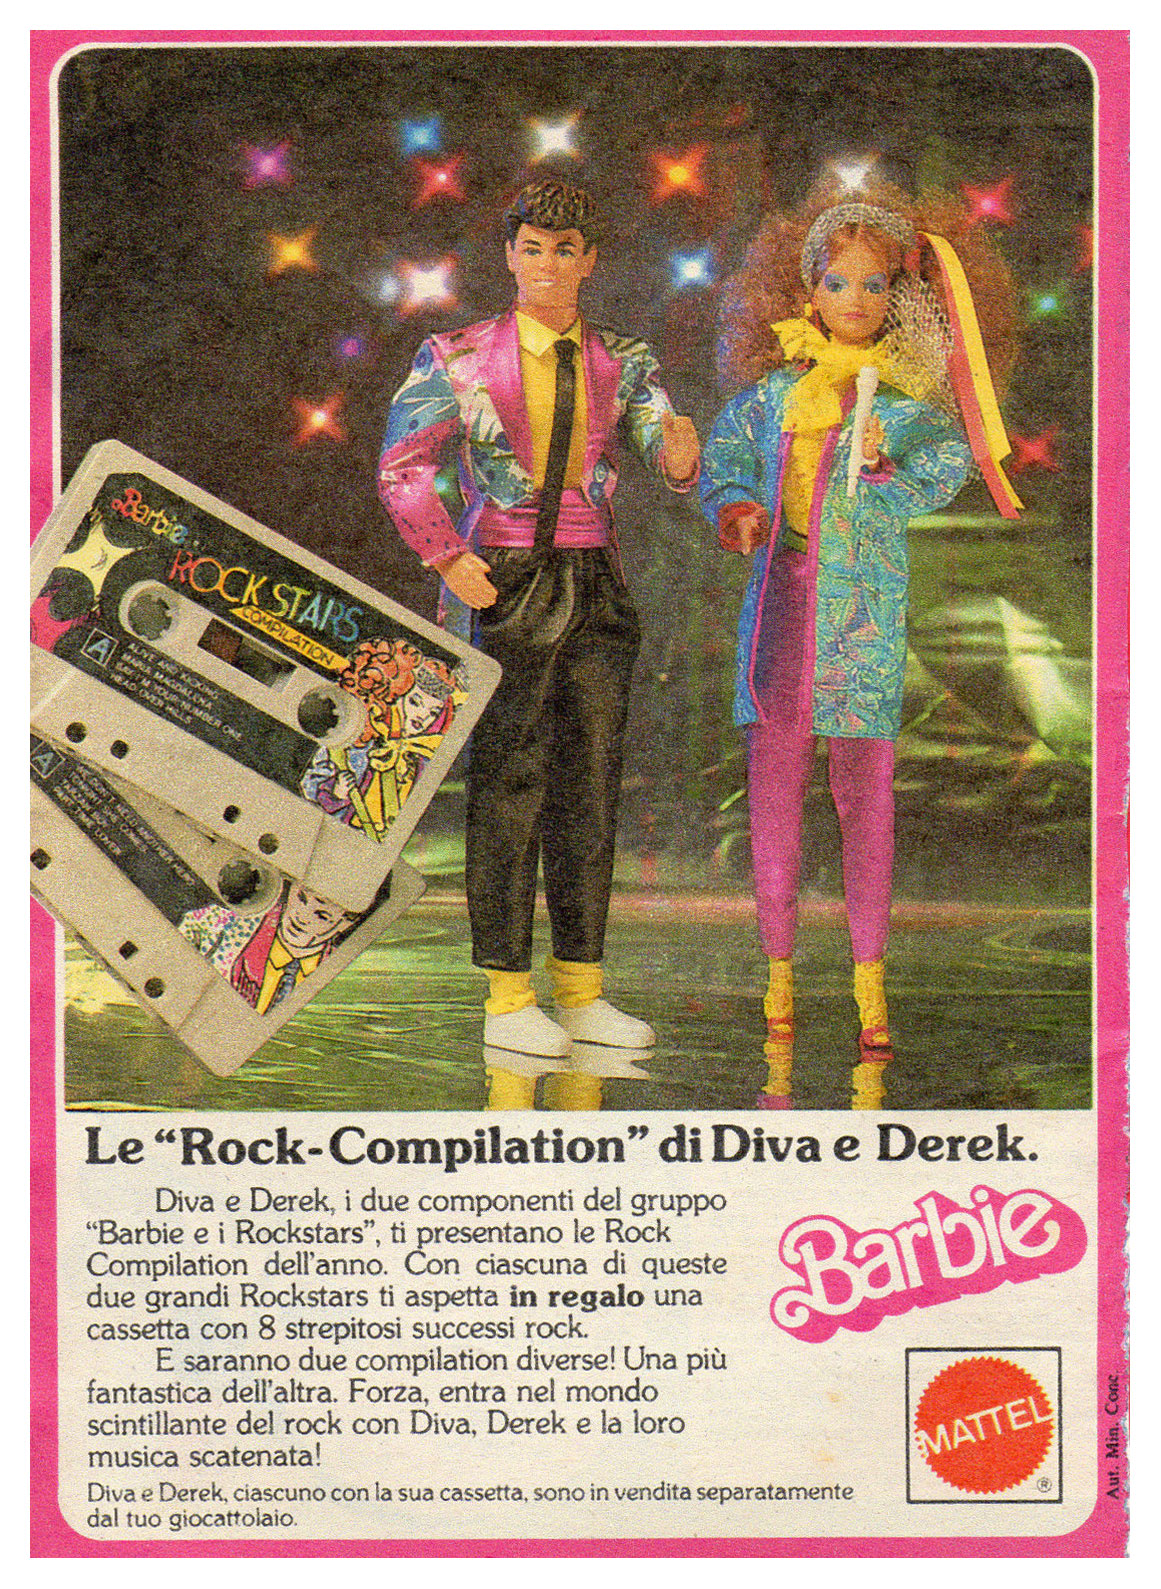 1986 Italian Rock Stars Derek advertisement